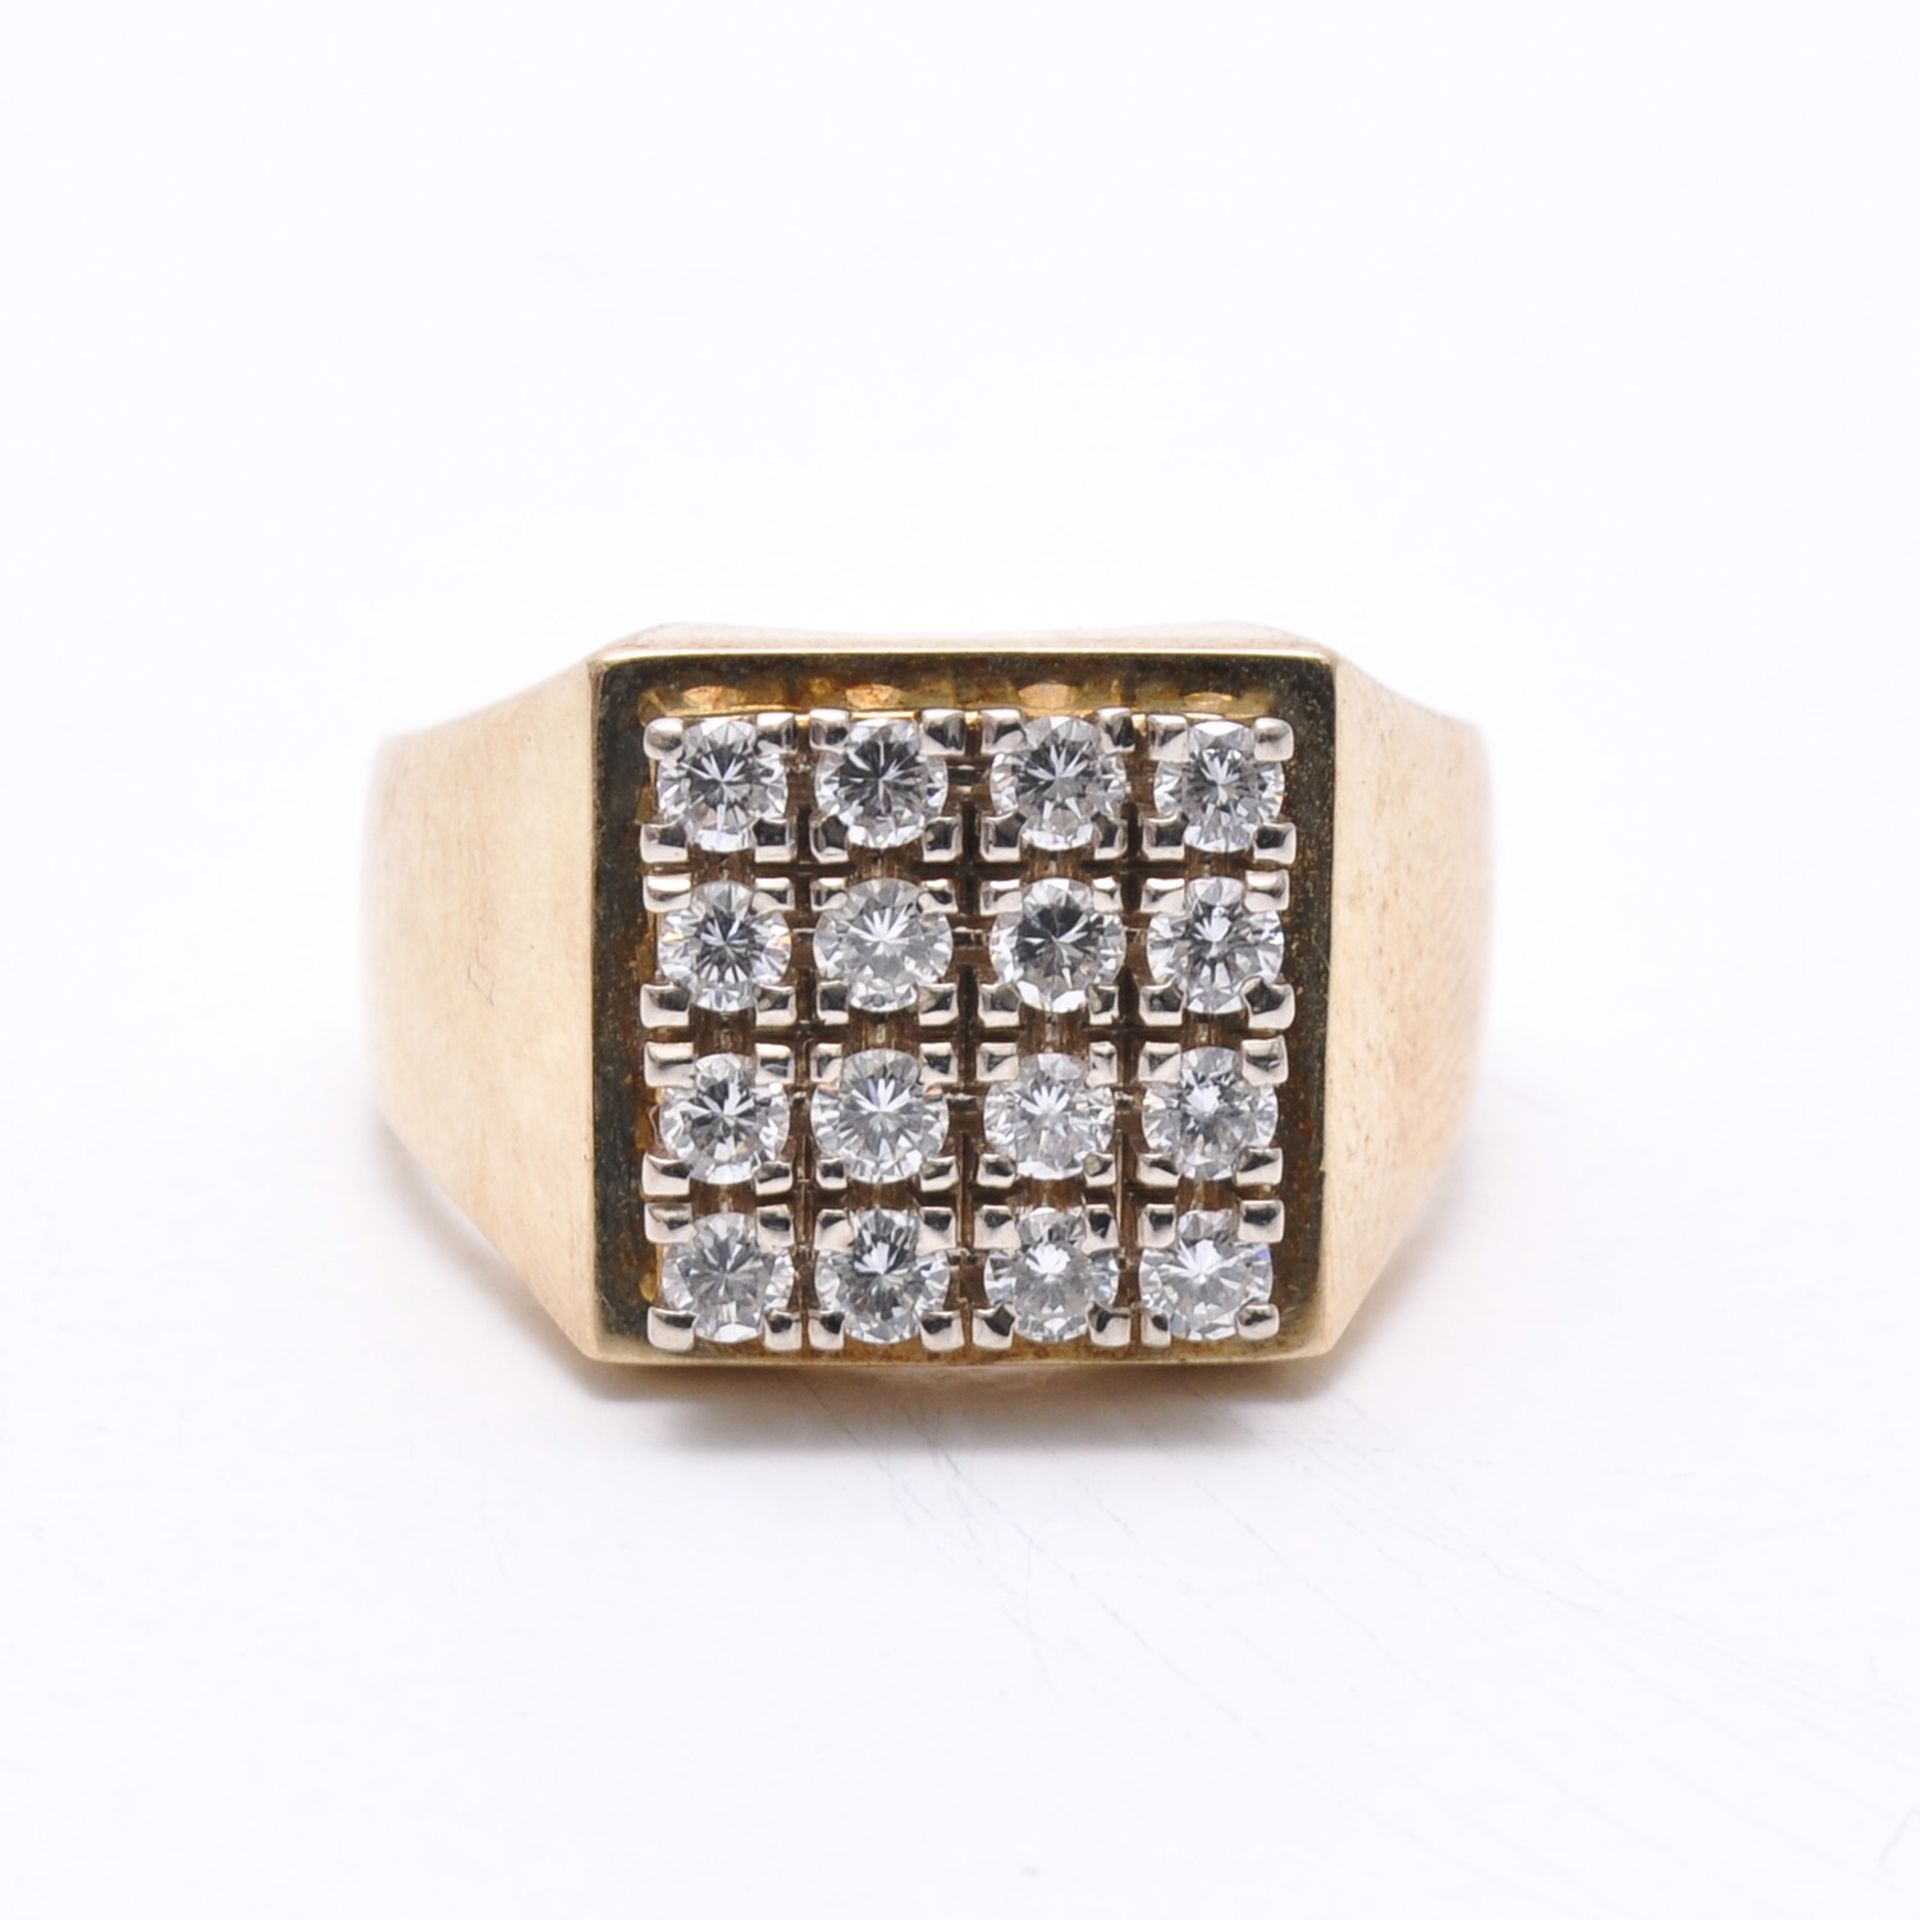 A Mens 14KG Diamond Ring